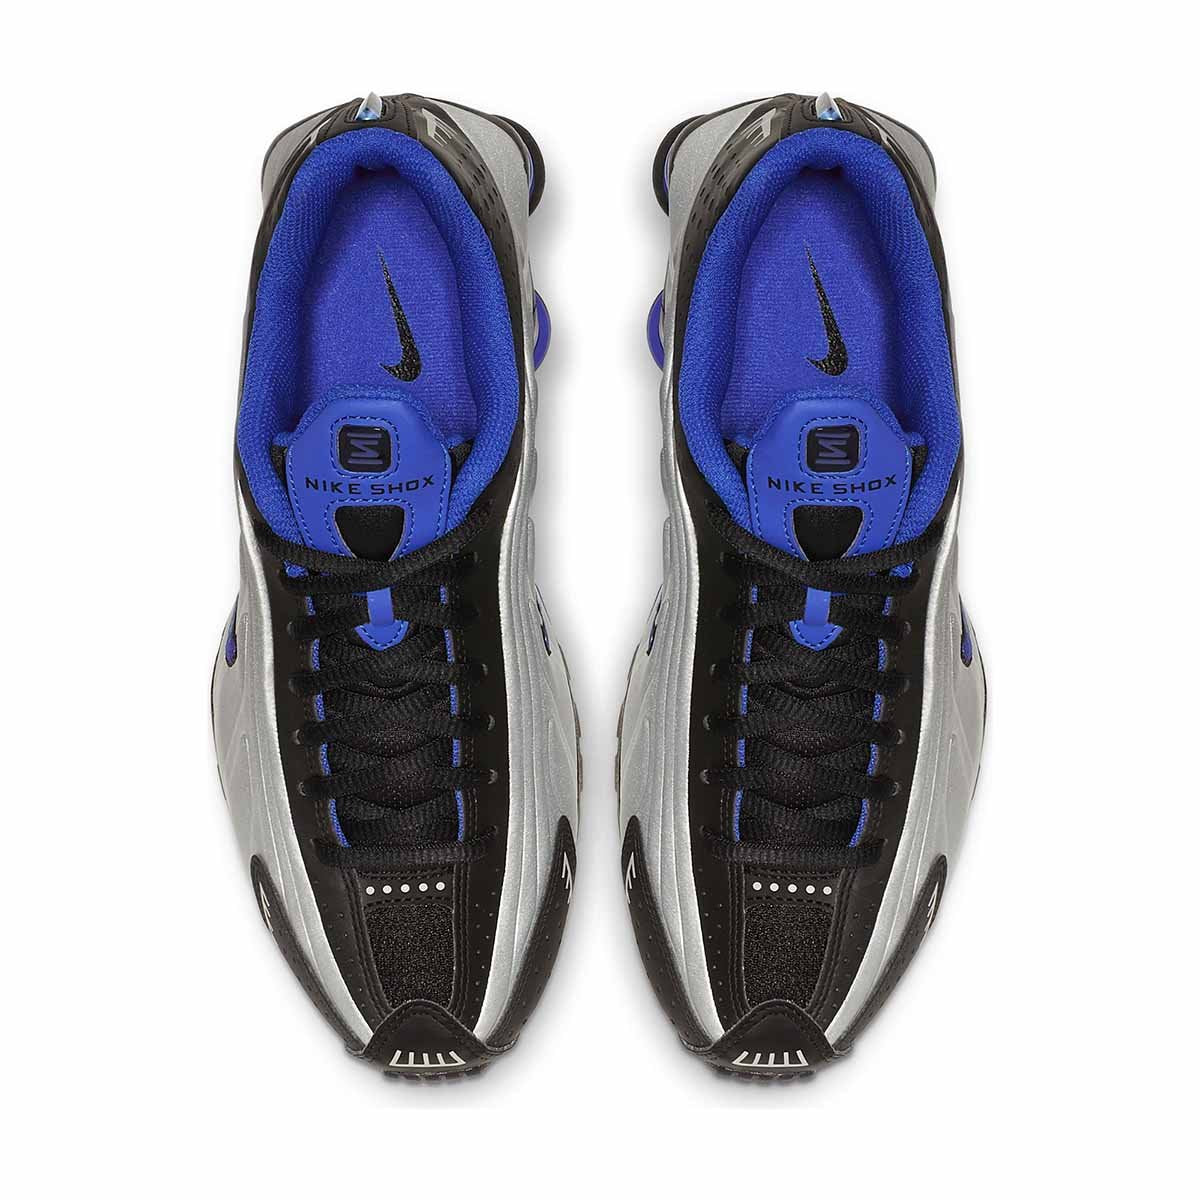 Kids Nike Shox R4 - Millennium Shoes